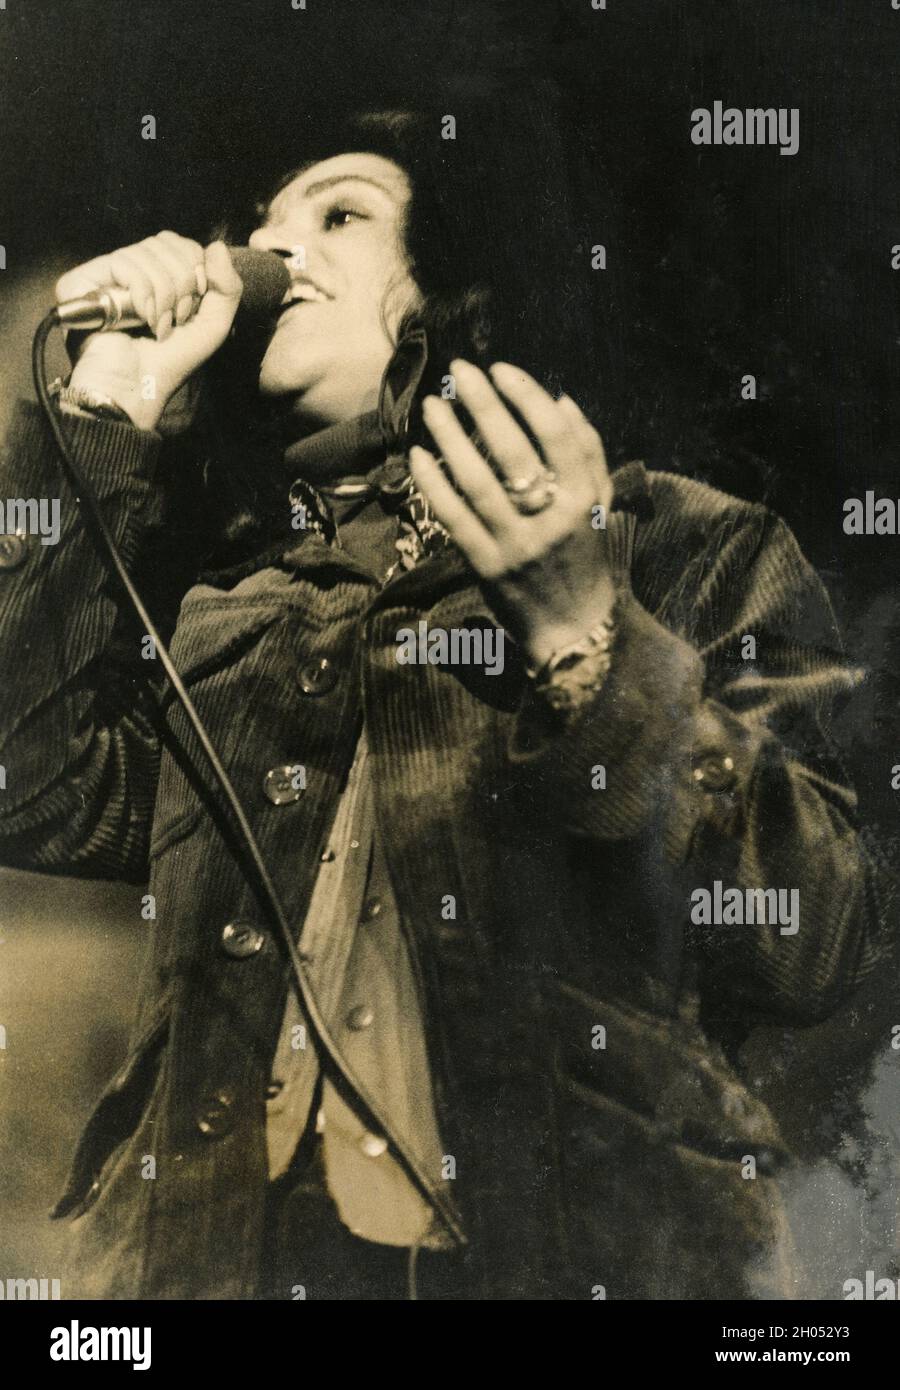 Italian singer and songwriter Mia Martini, 1970s Stock Photo